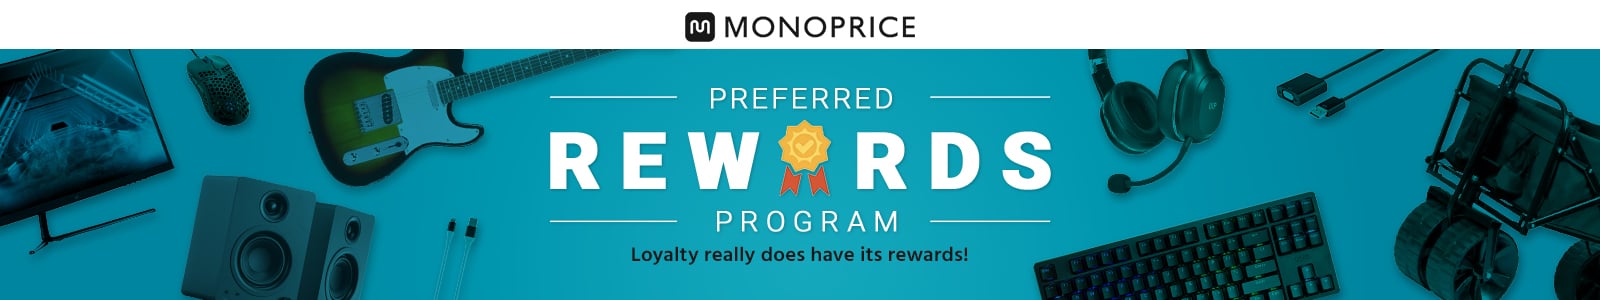 Monoprice (logo) Preferred Rewards Program Loyalty really does have its rewards!